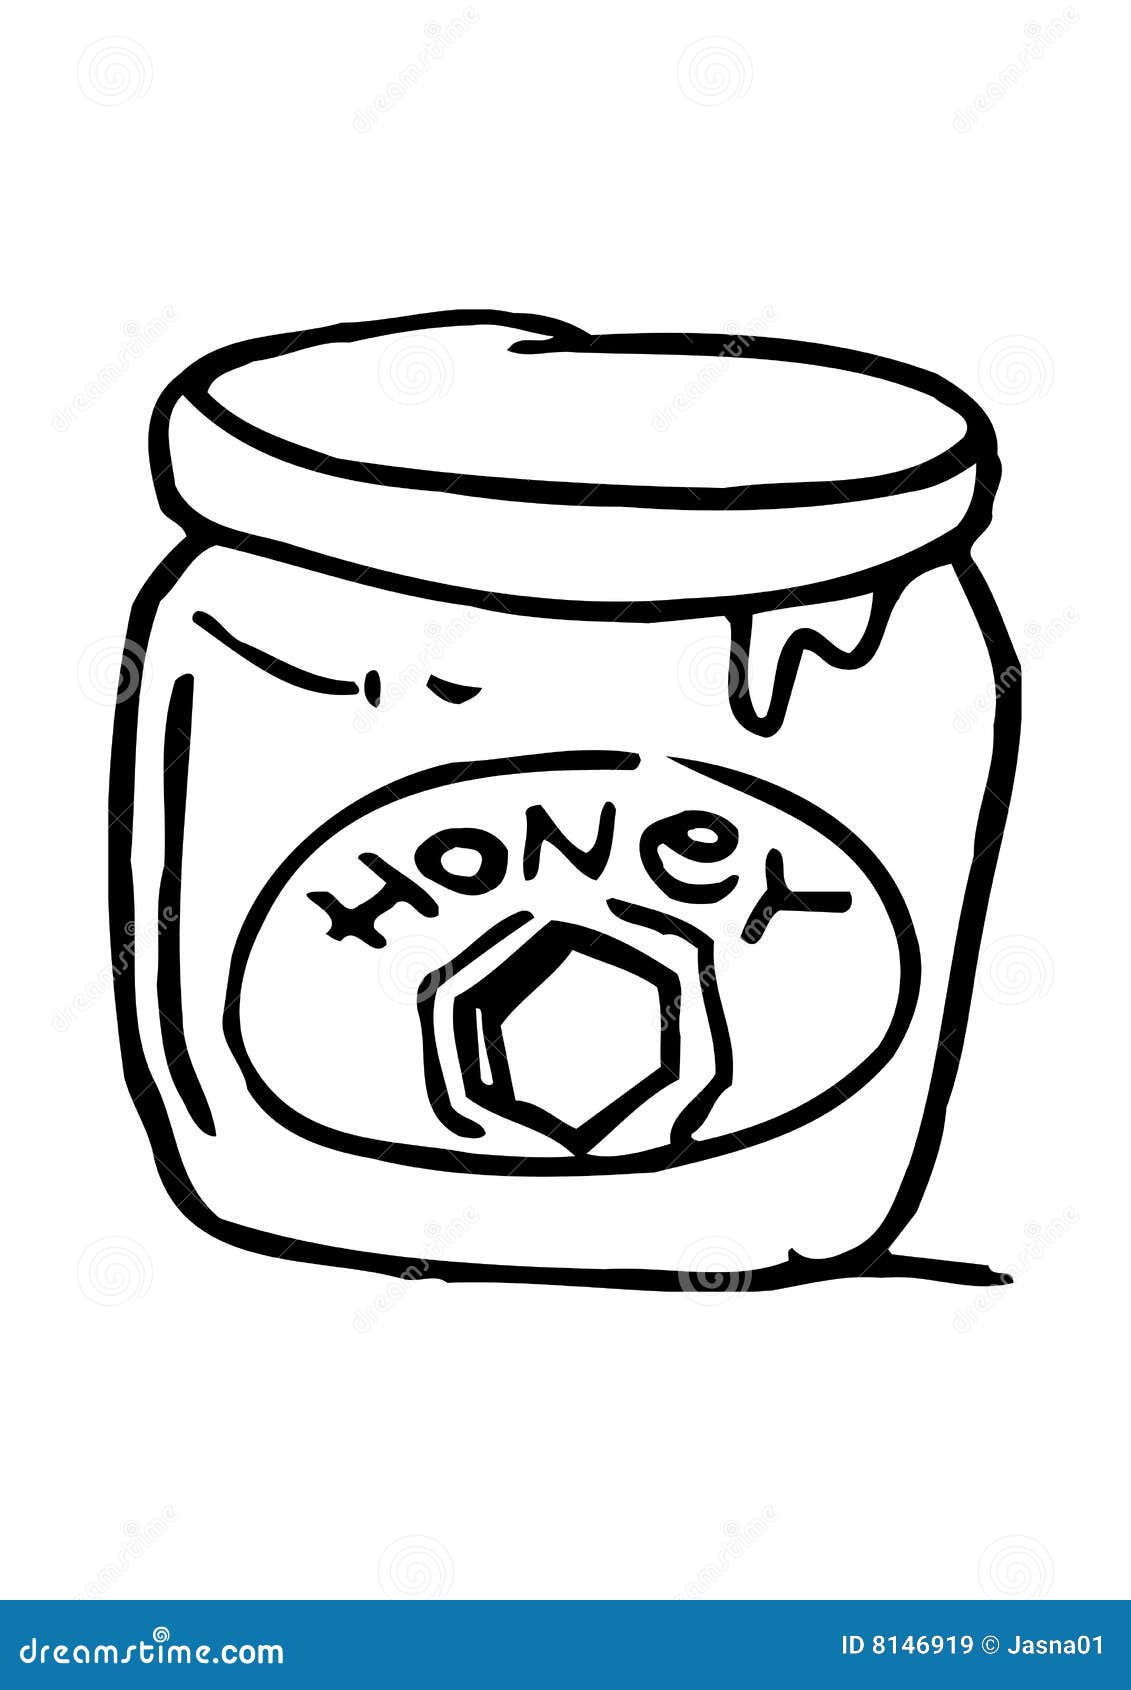 free clipart of honey - photo #19